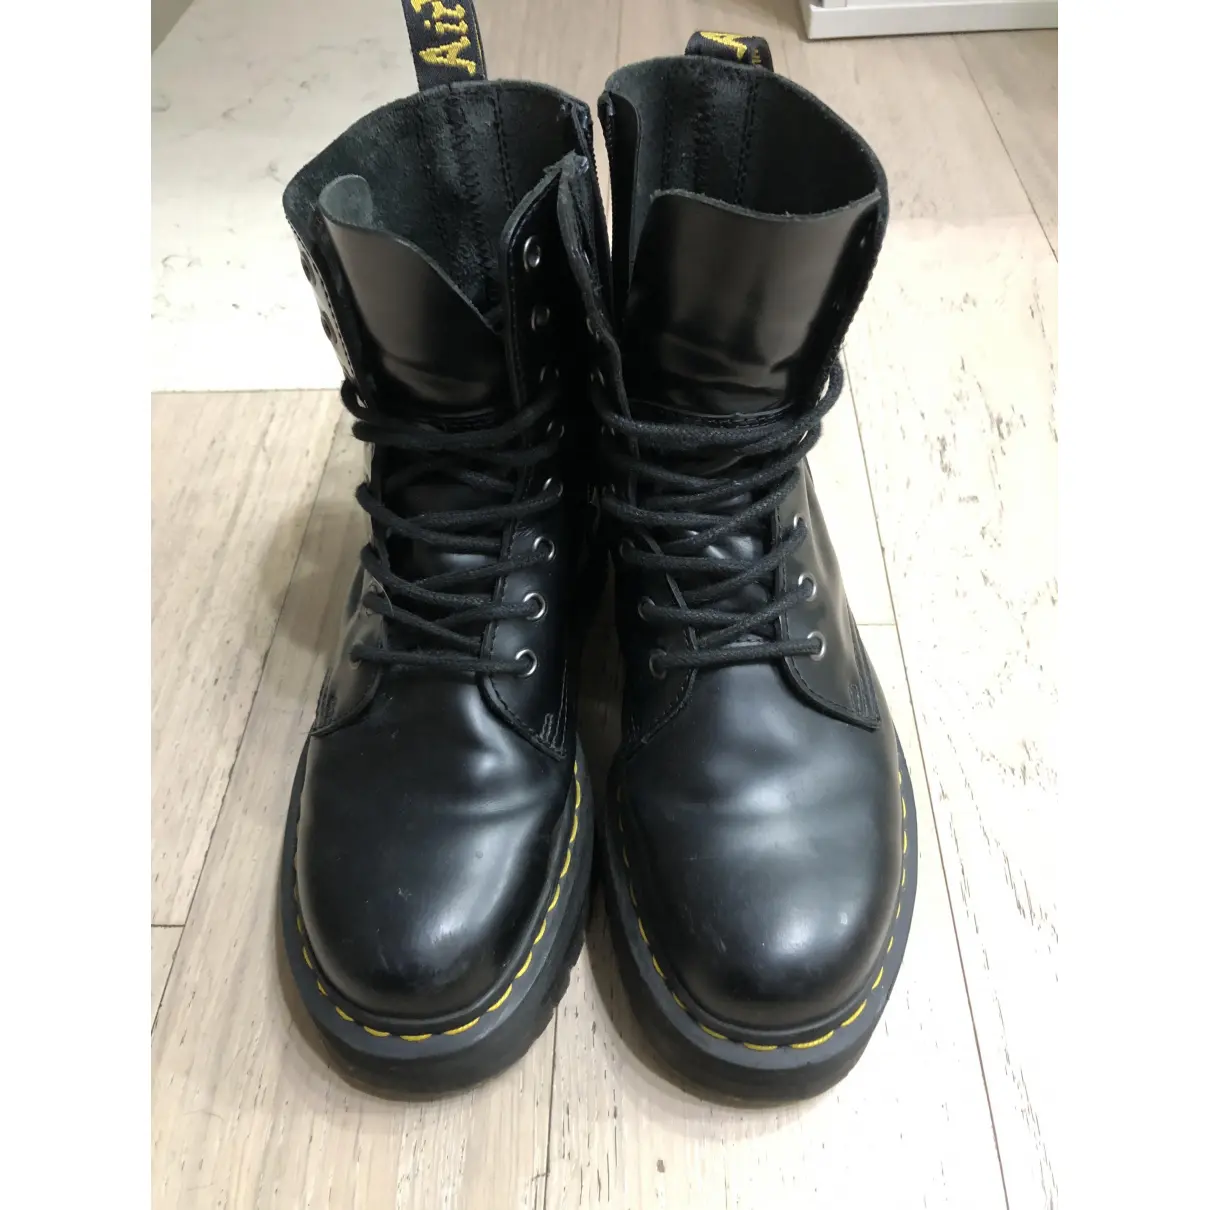 Buy Dr. Martens Jadon leather biker boots online